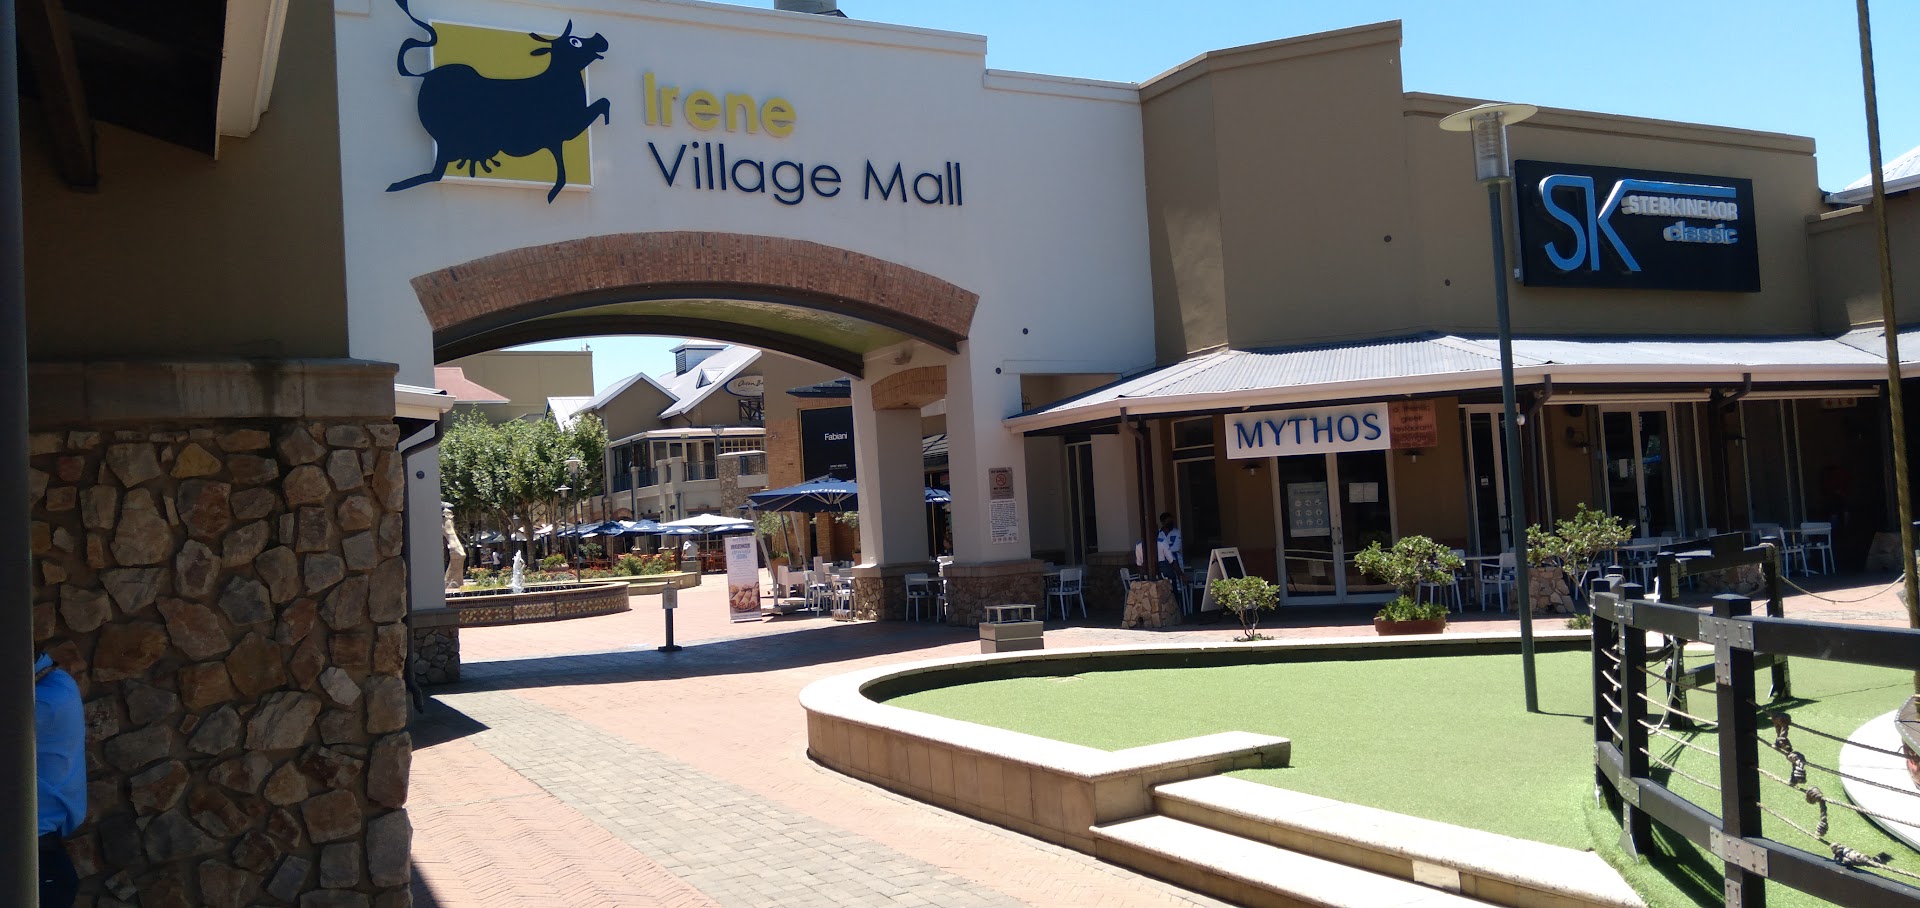 Mythos Irene Village Mall